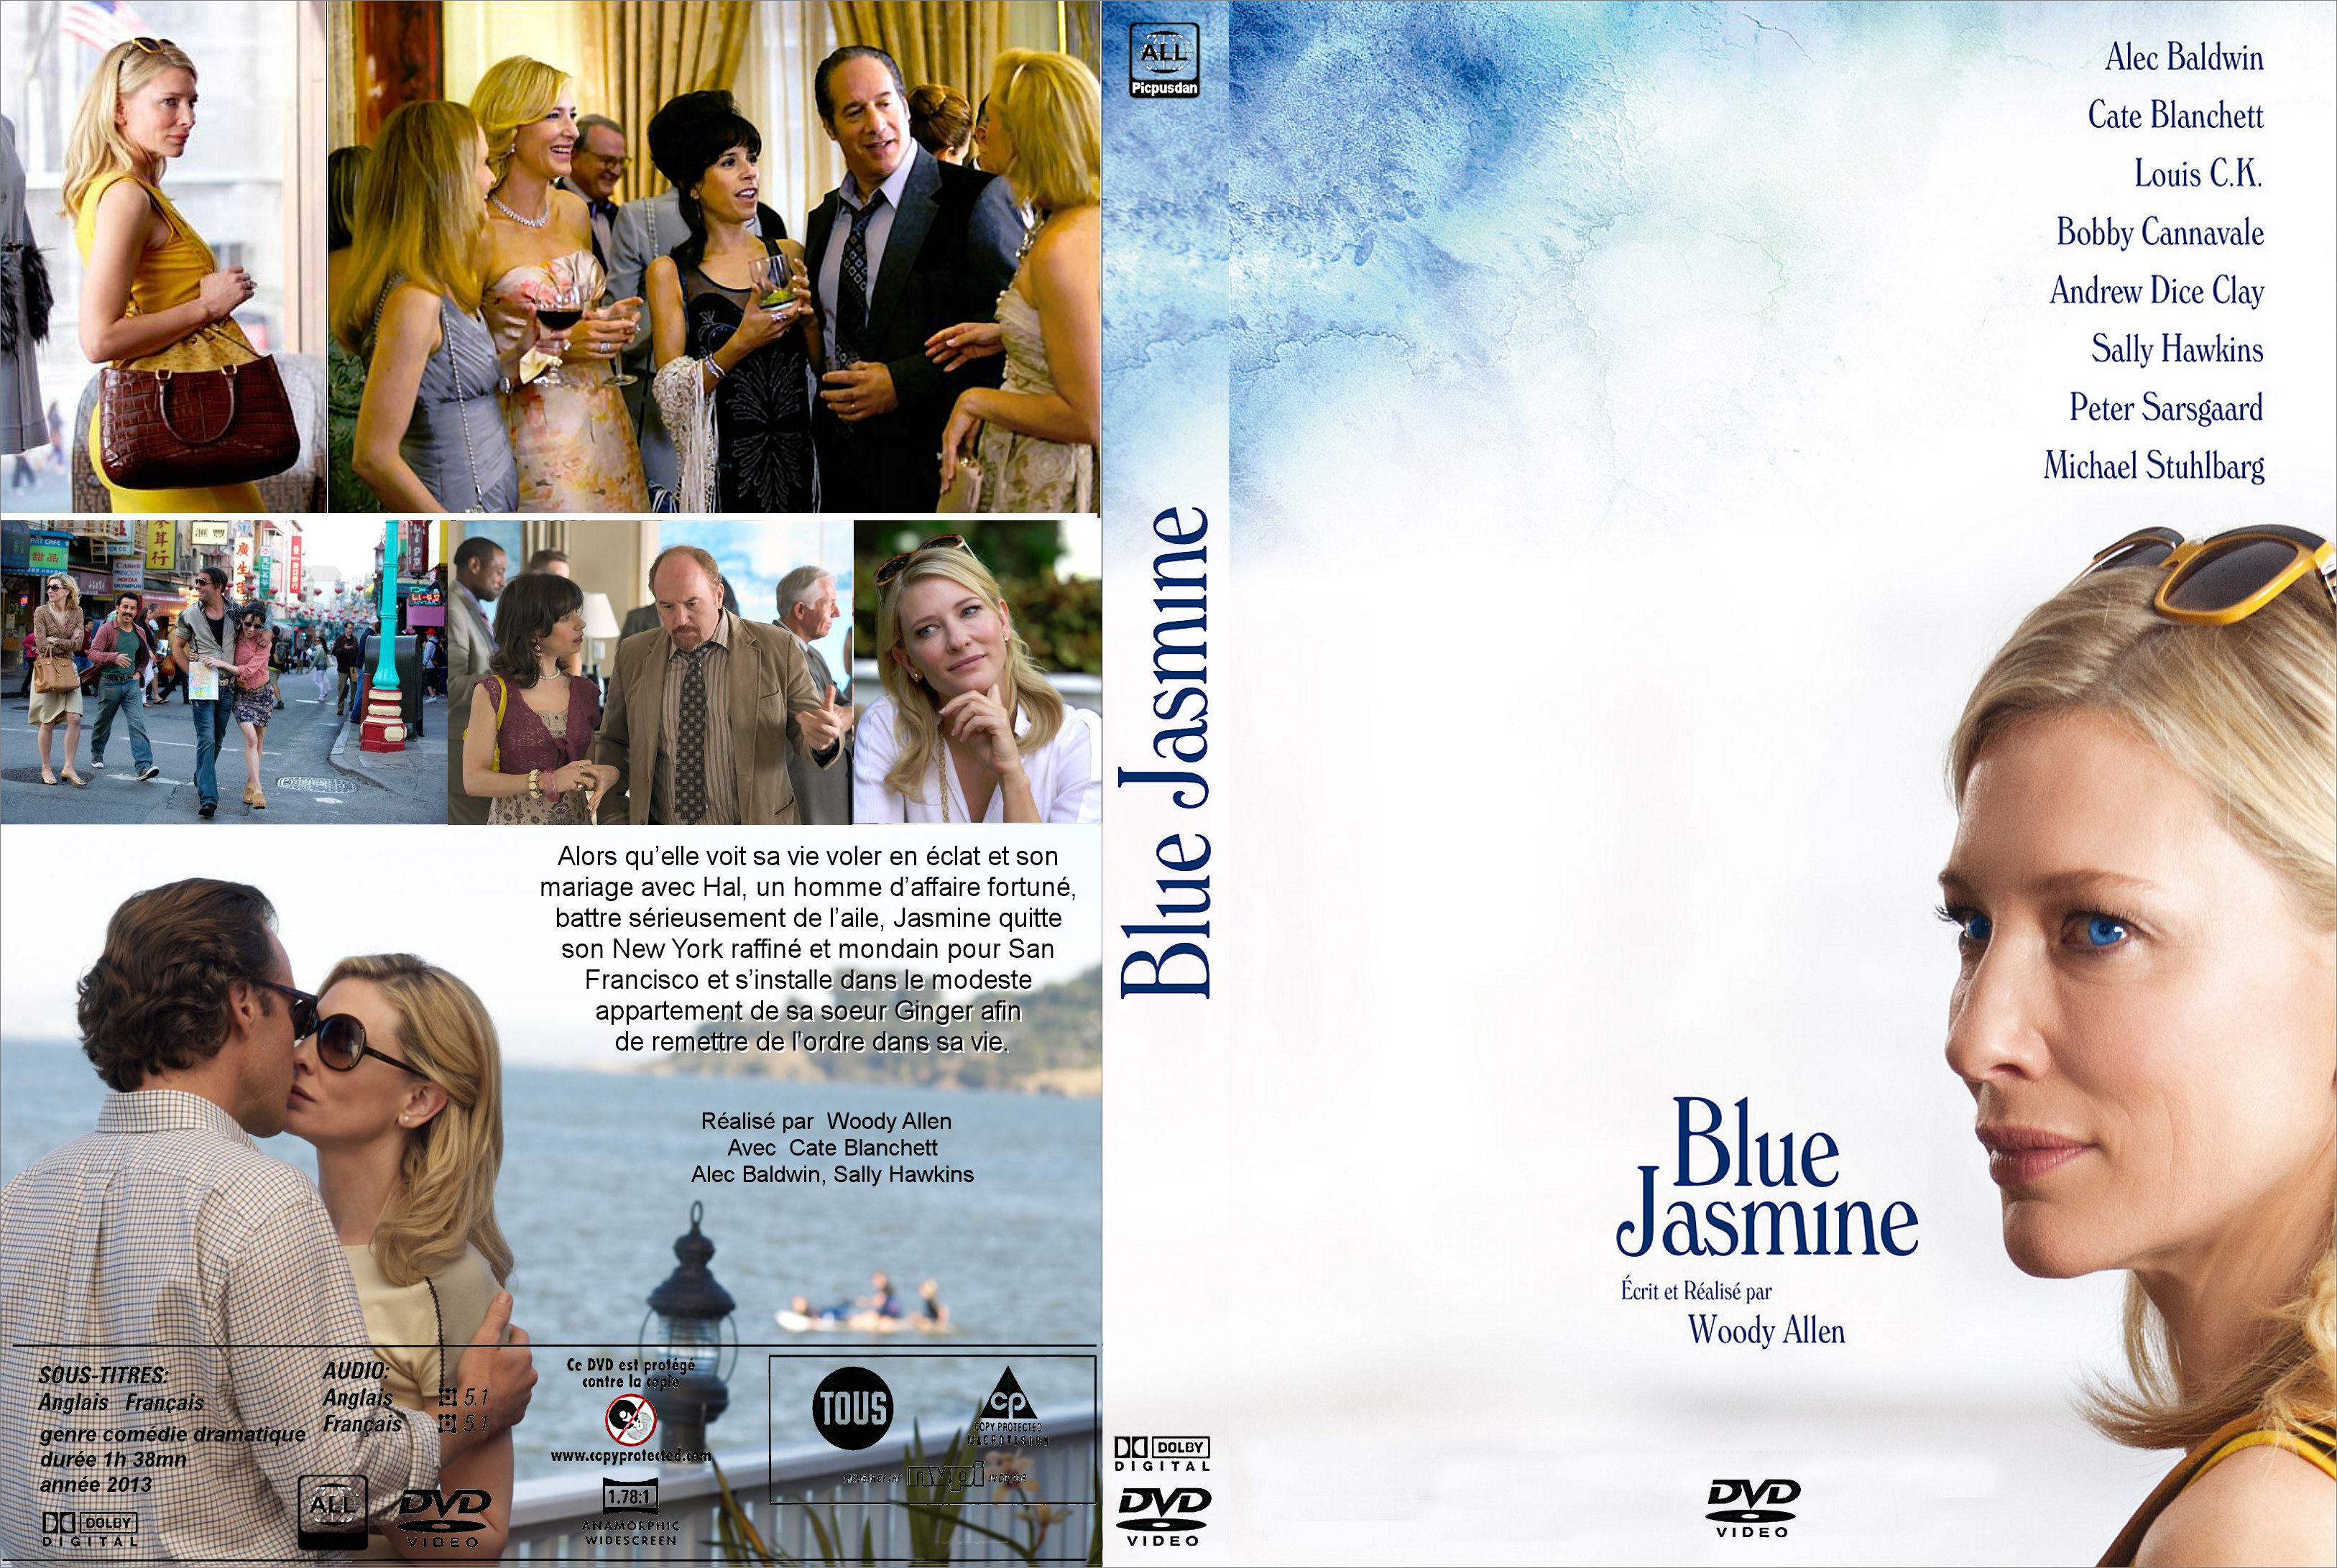 Jaquette DVD Blue Jasmine custom